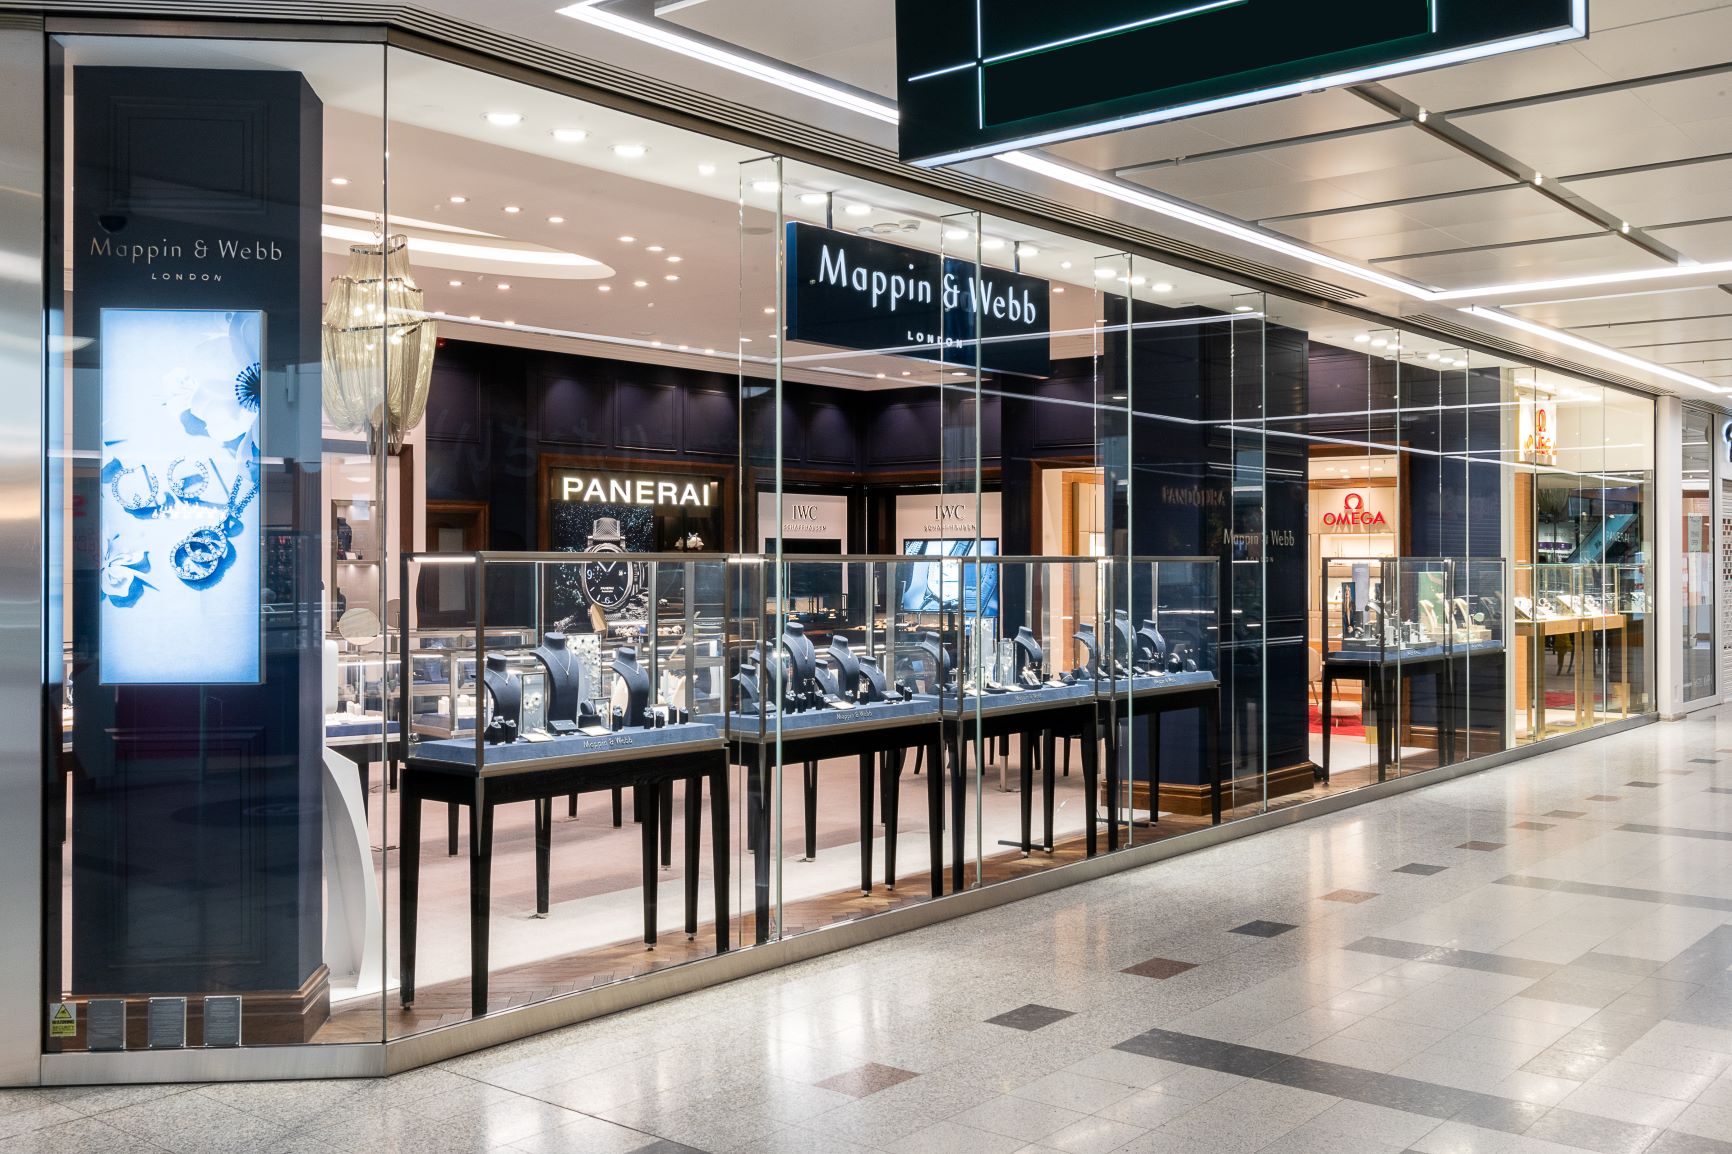 Mappin & Webb reveals new-look showroom after major refurbishment